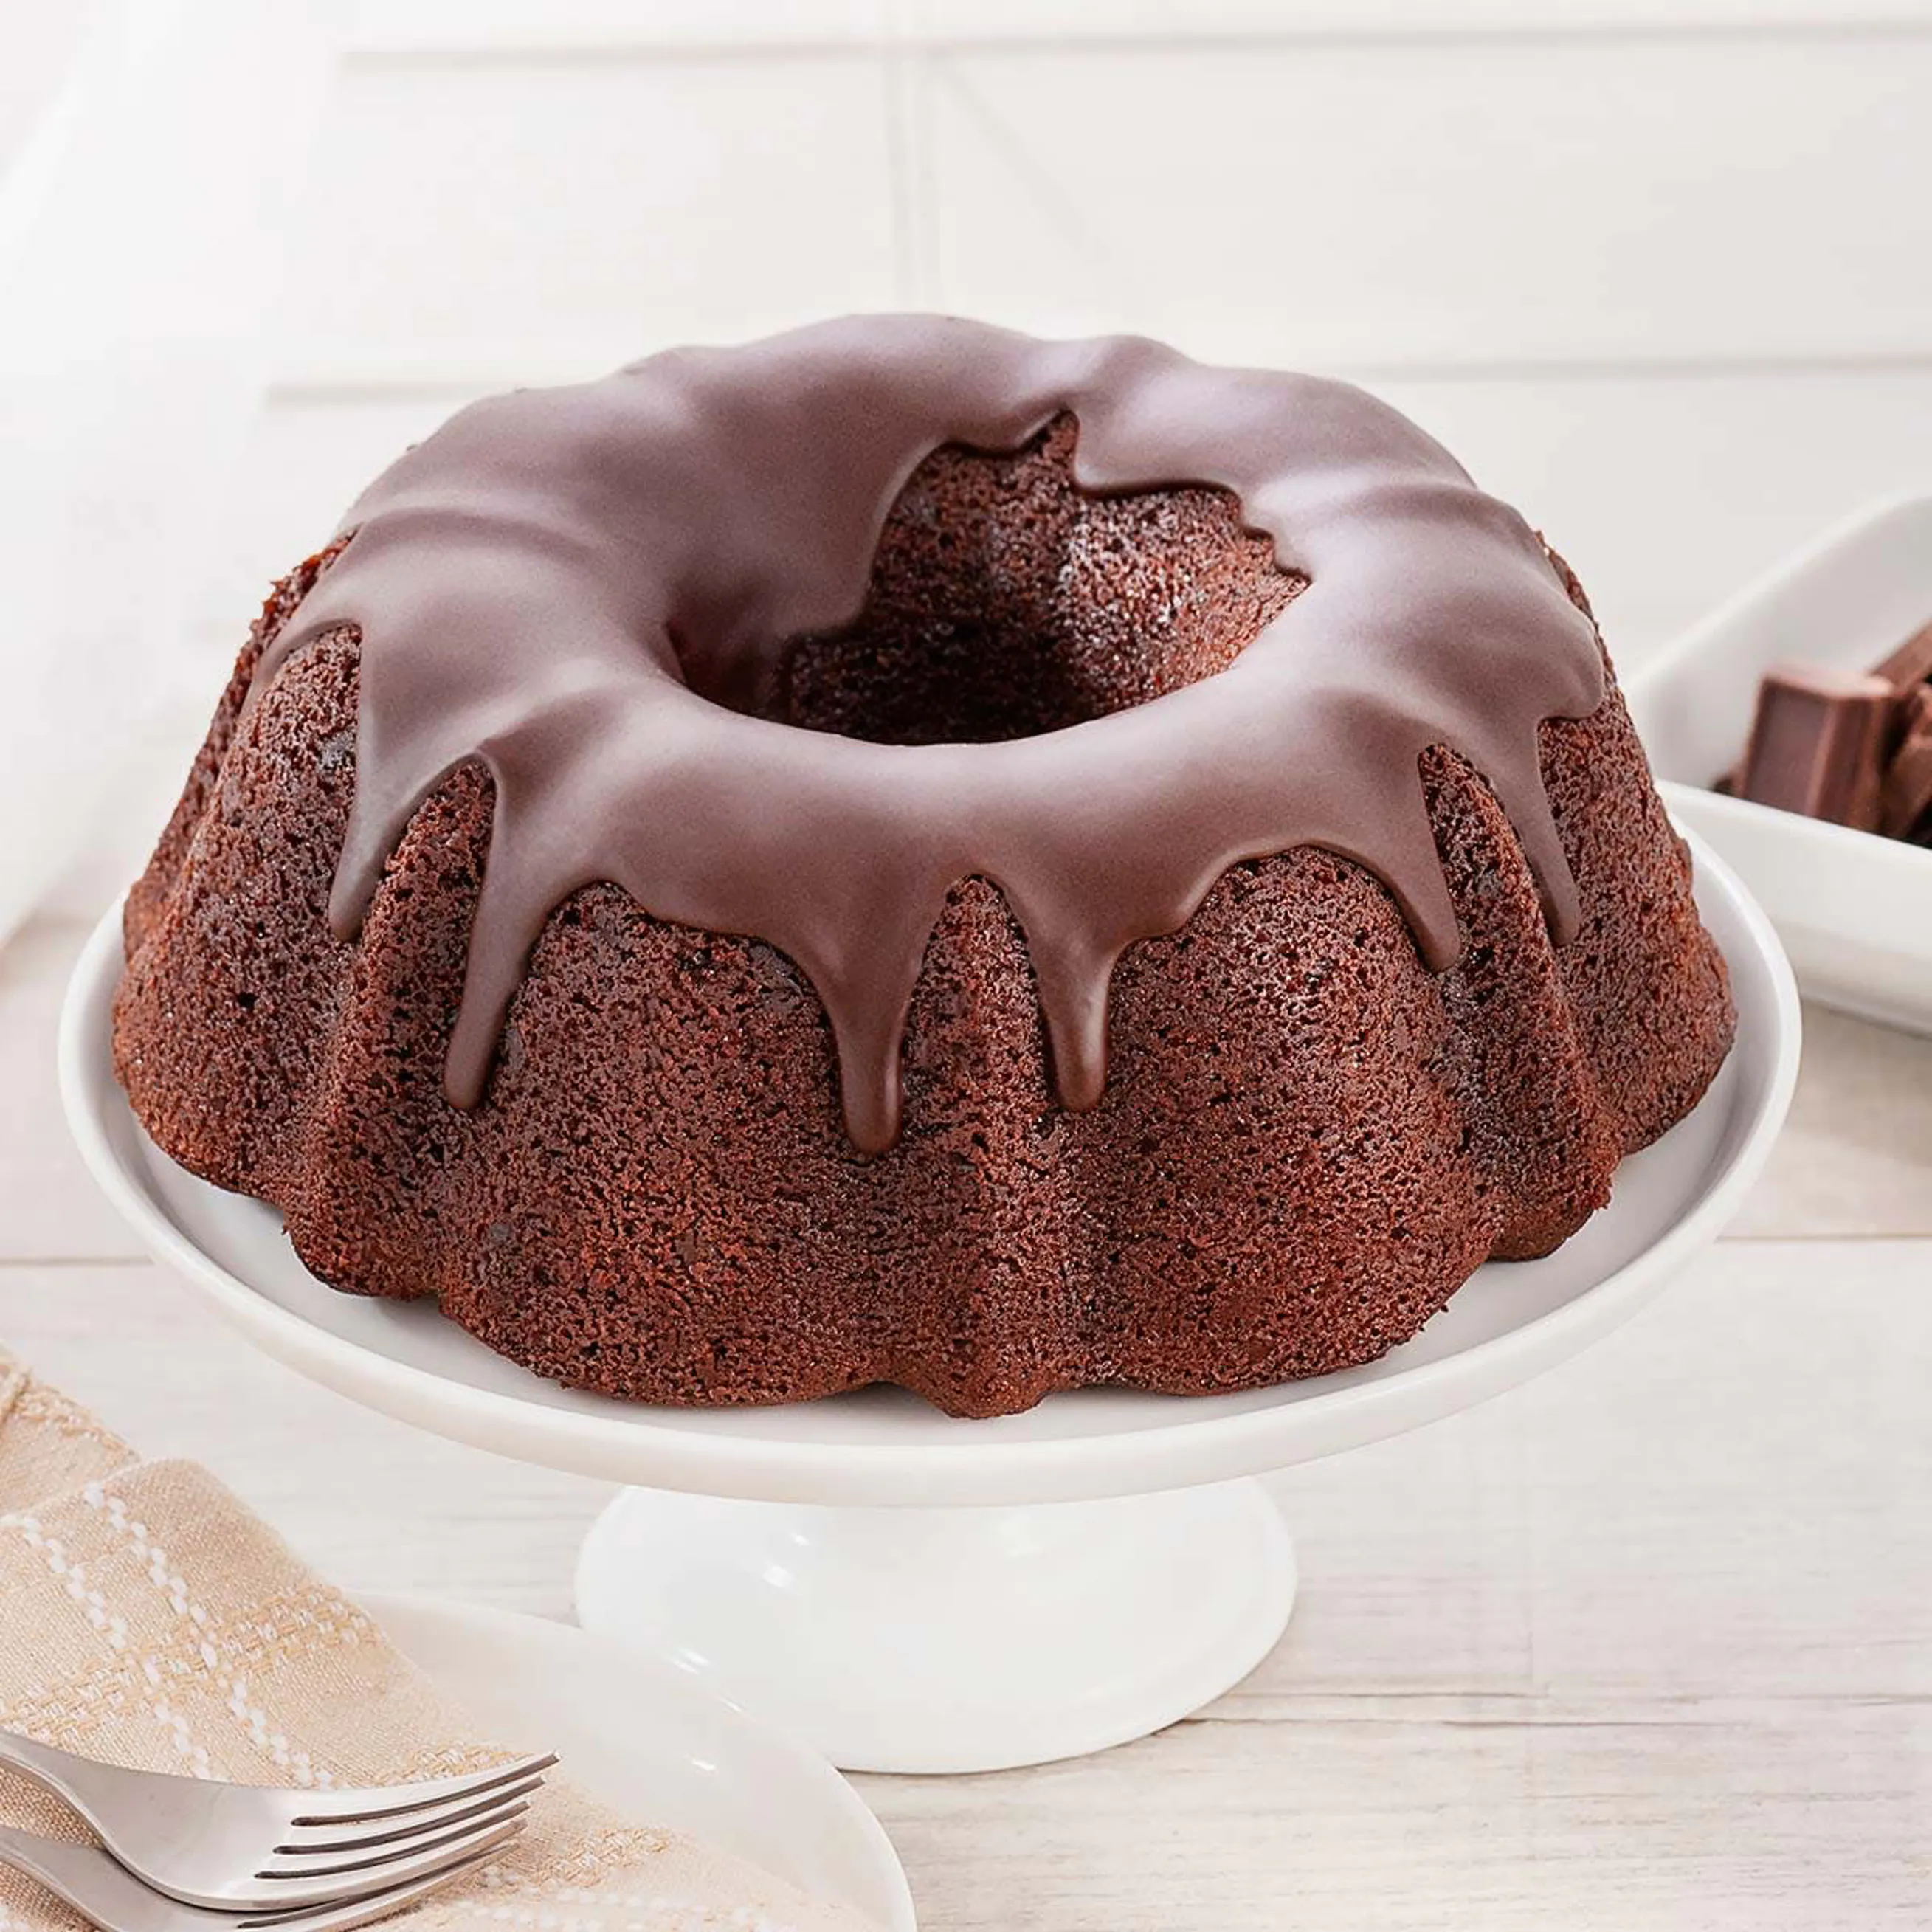 Pound Cake w/ chocolate topping